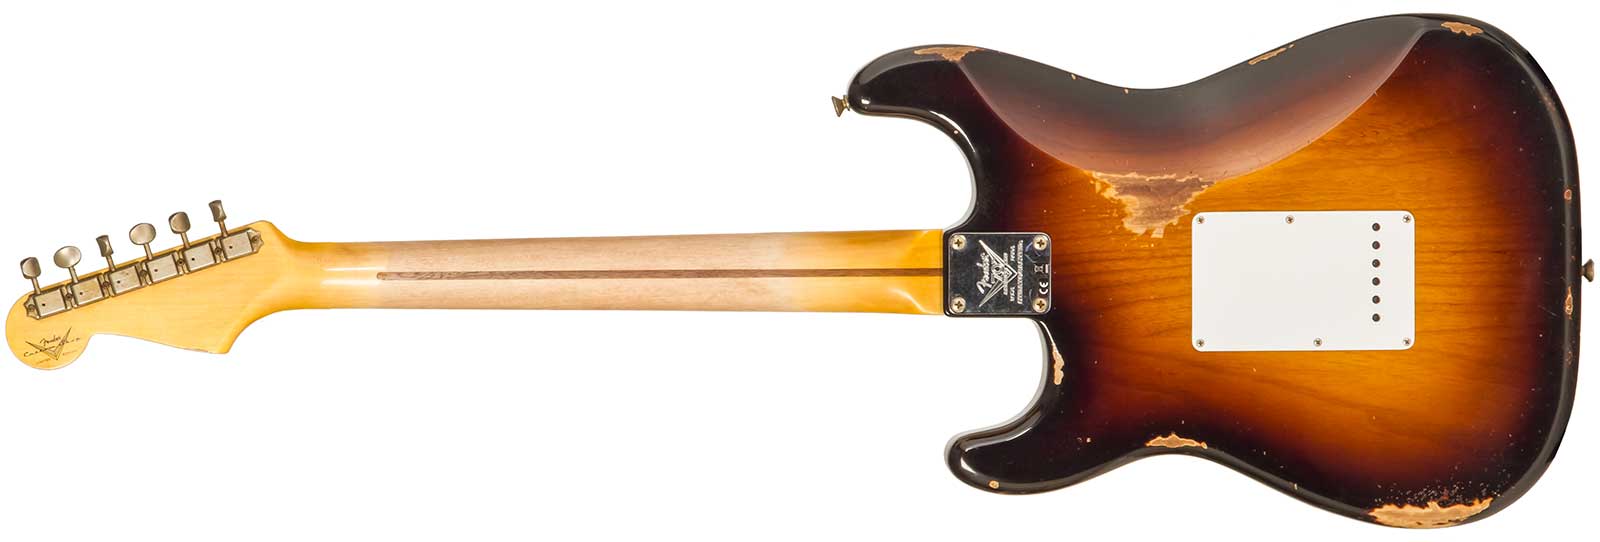 Fender Custom Shop Strat 1954 70th Anniv. 3s Trem Mn #xn4316 - Relic Wide Fade 2-color Sunburst - Guitare Électrique Forme Str - Variation 1